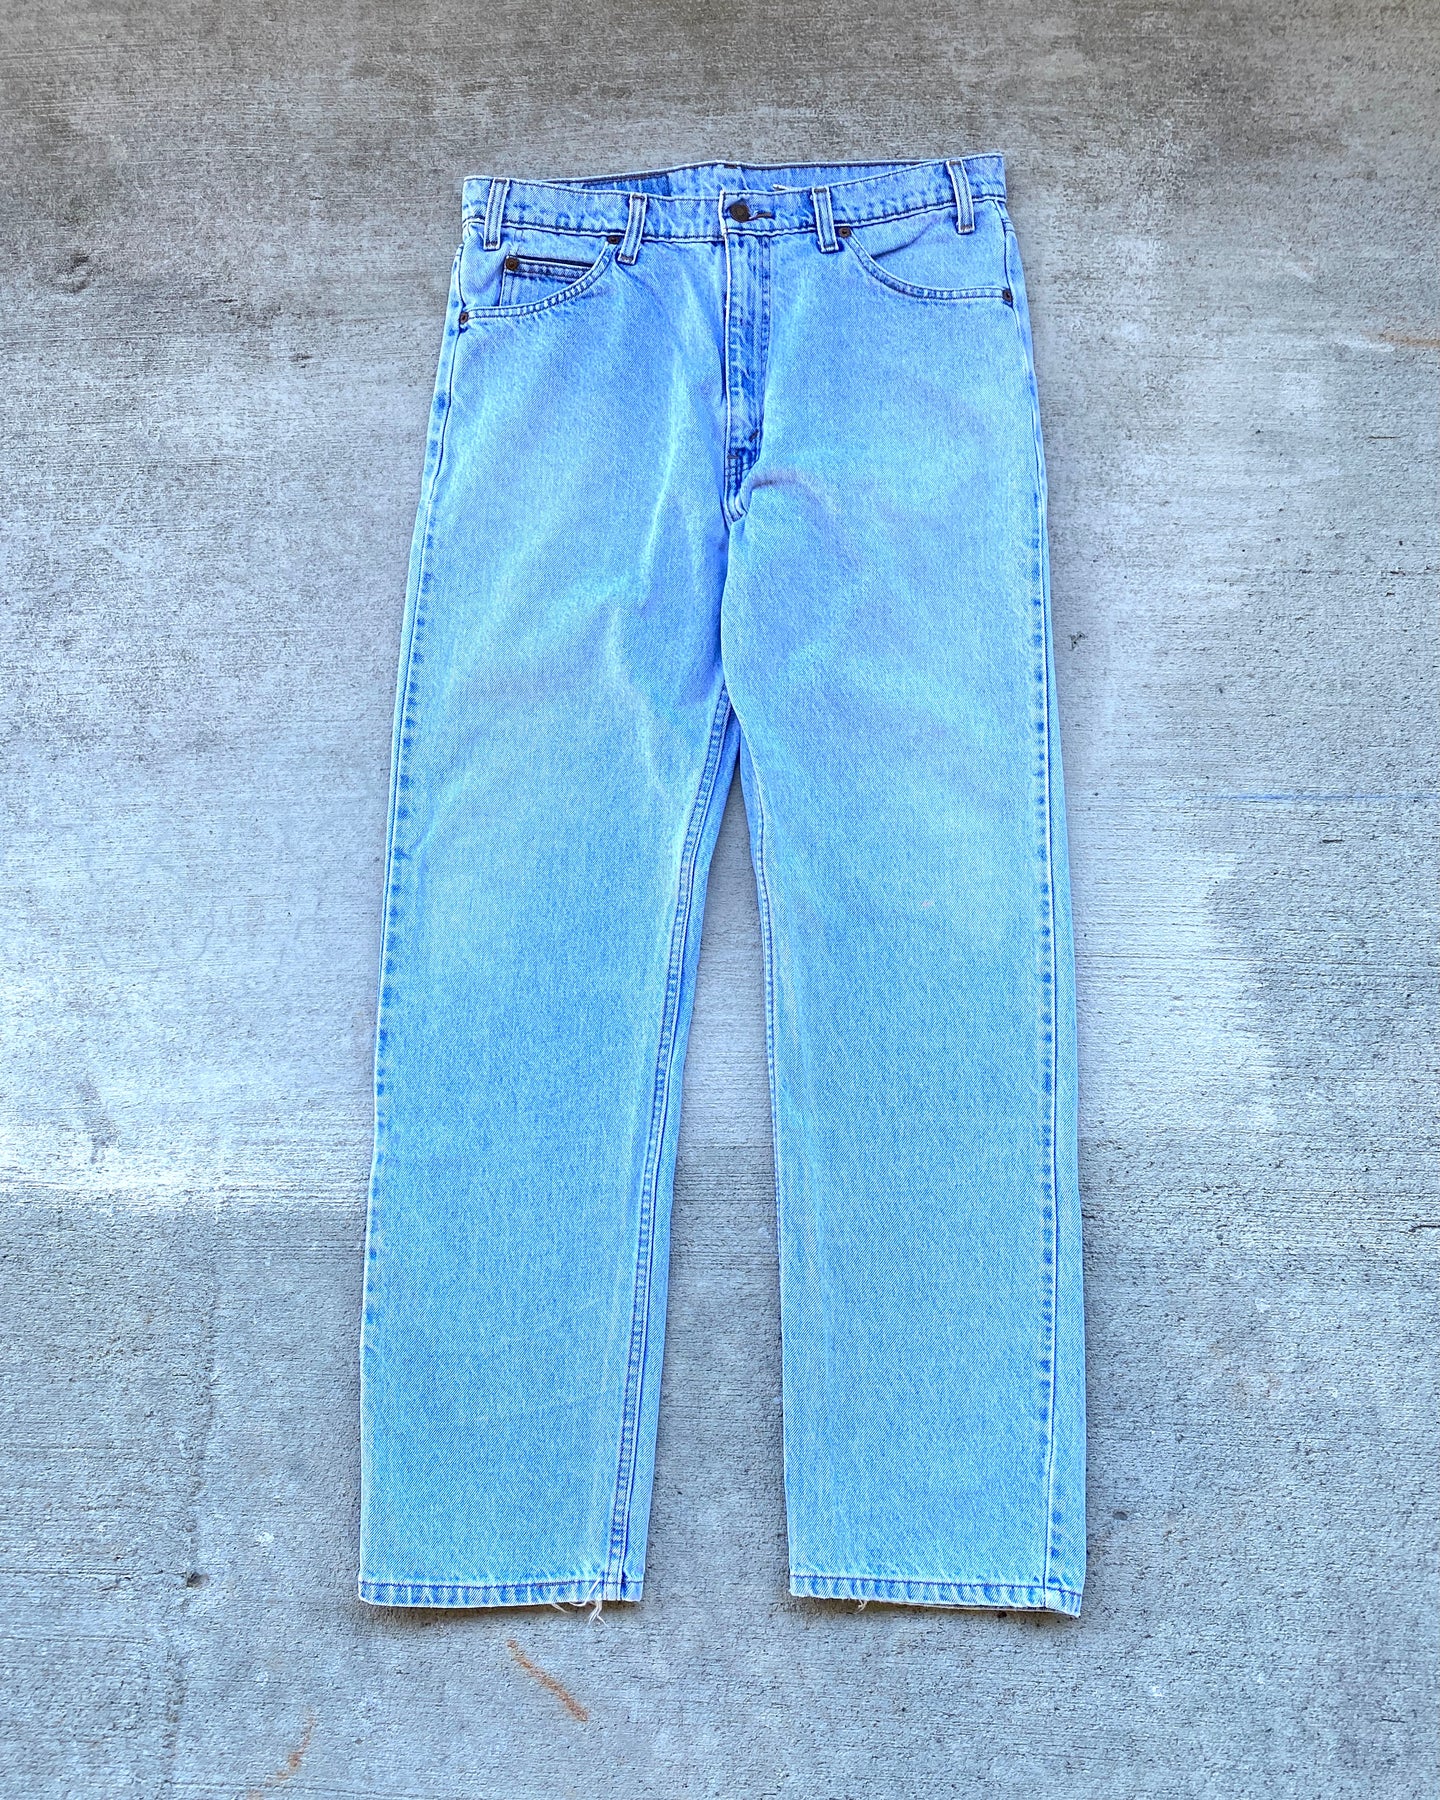 1990s Levi's Orange Tab 505 Light Wash Jeans - Size 34 x 32